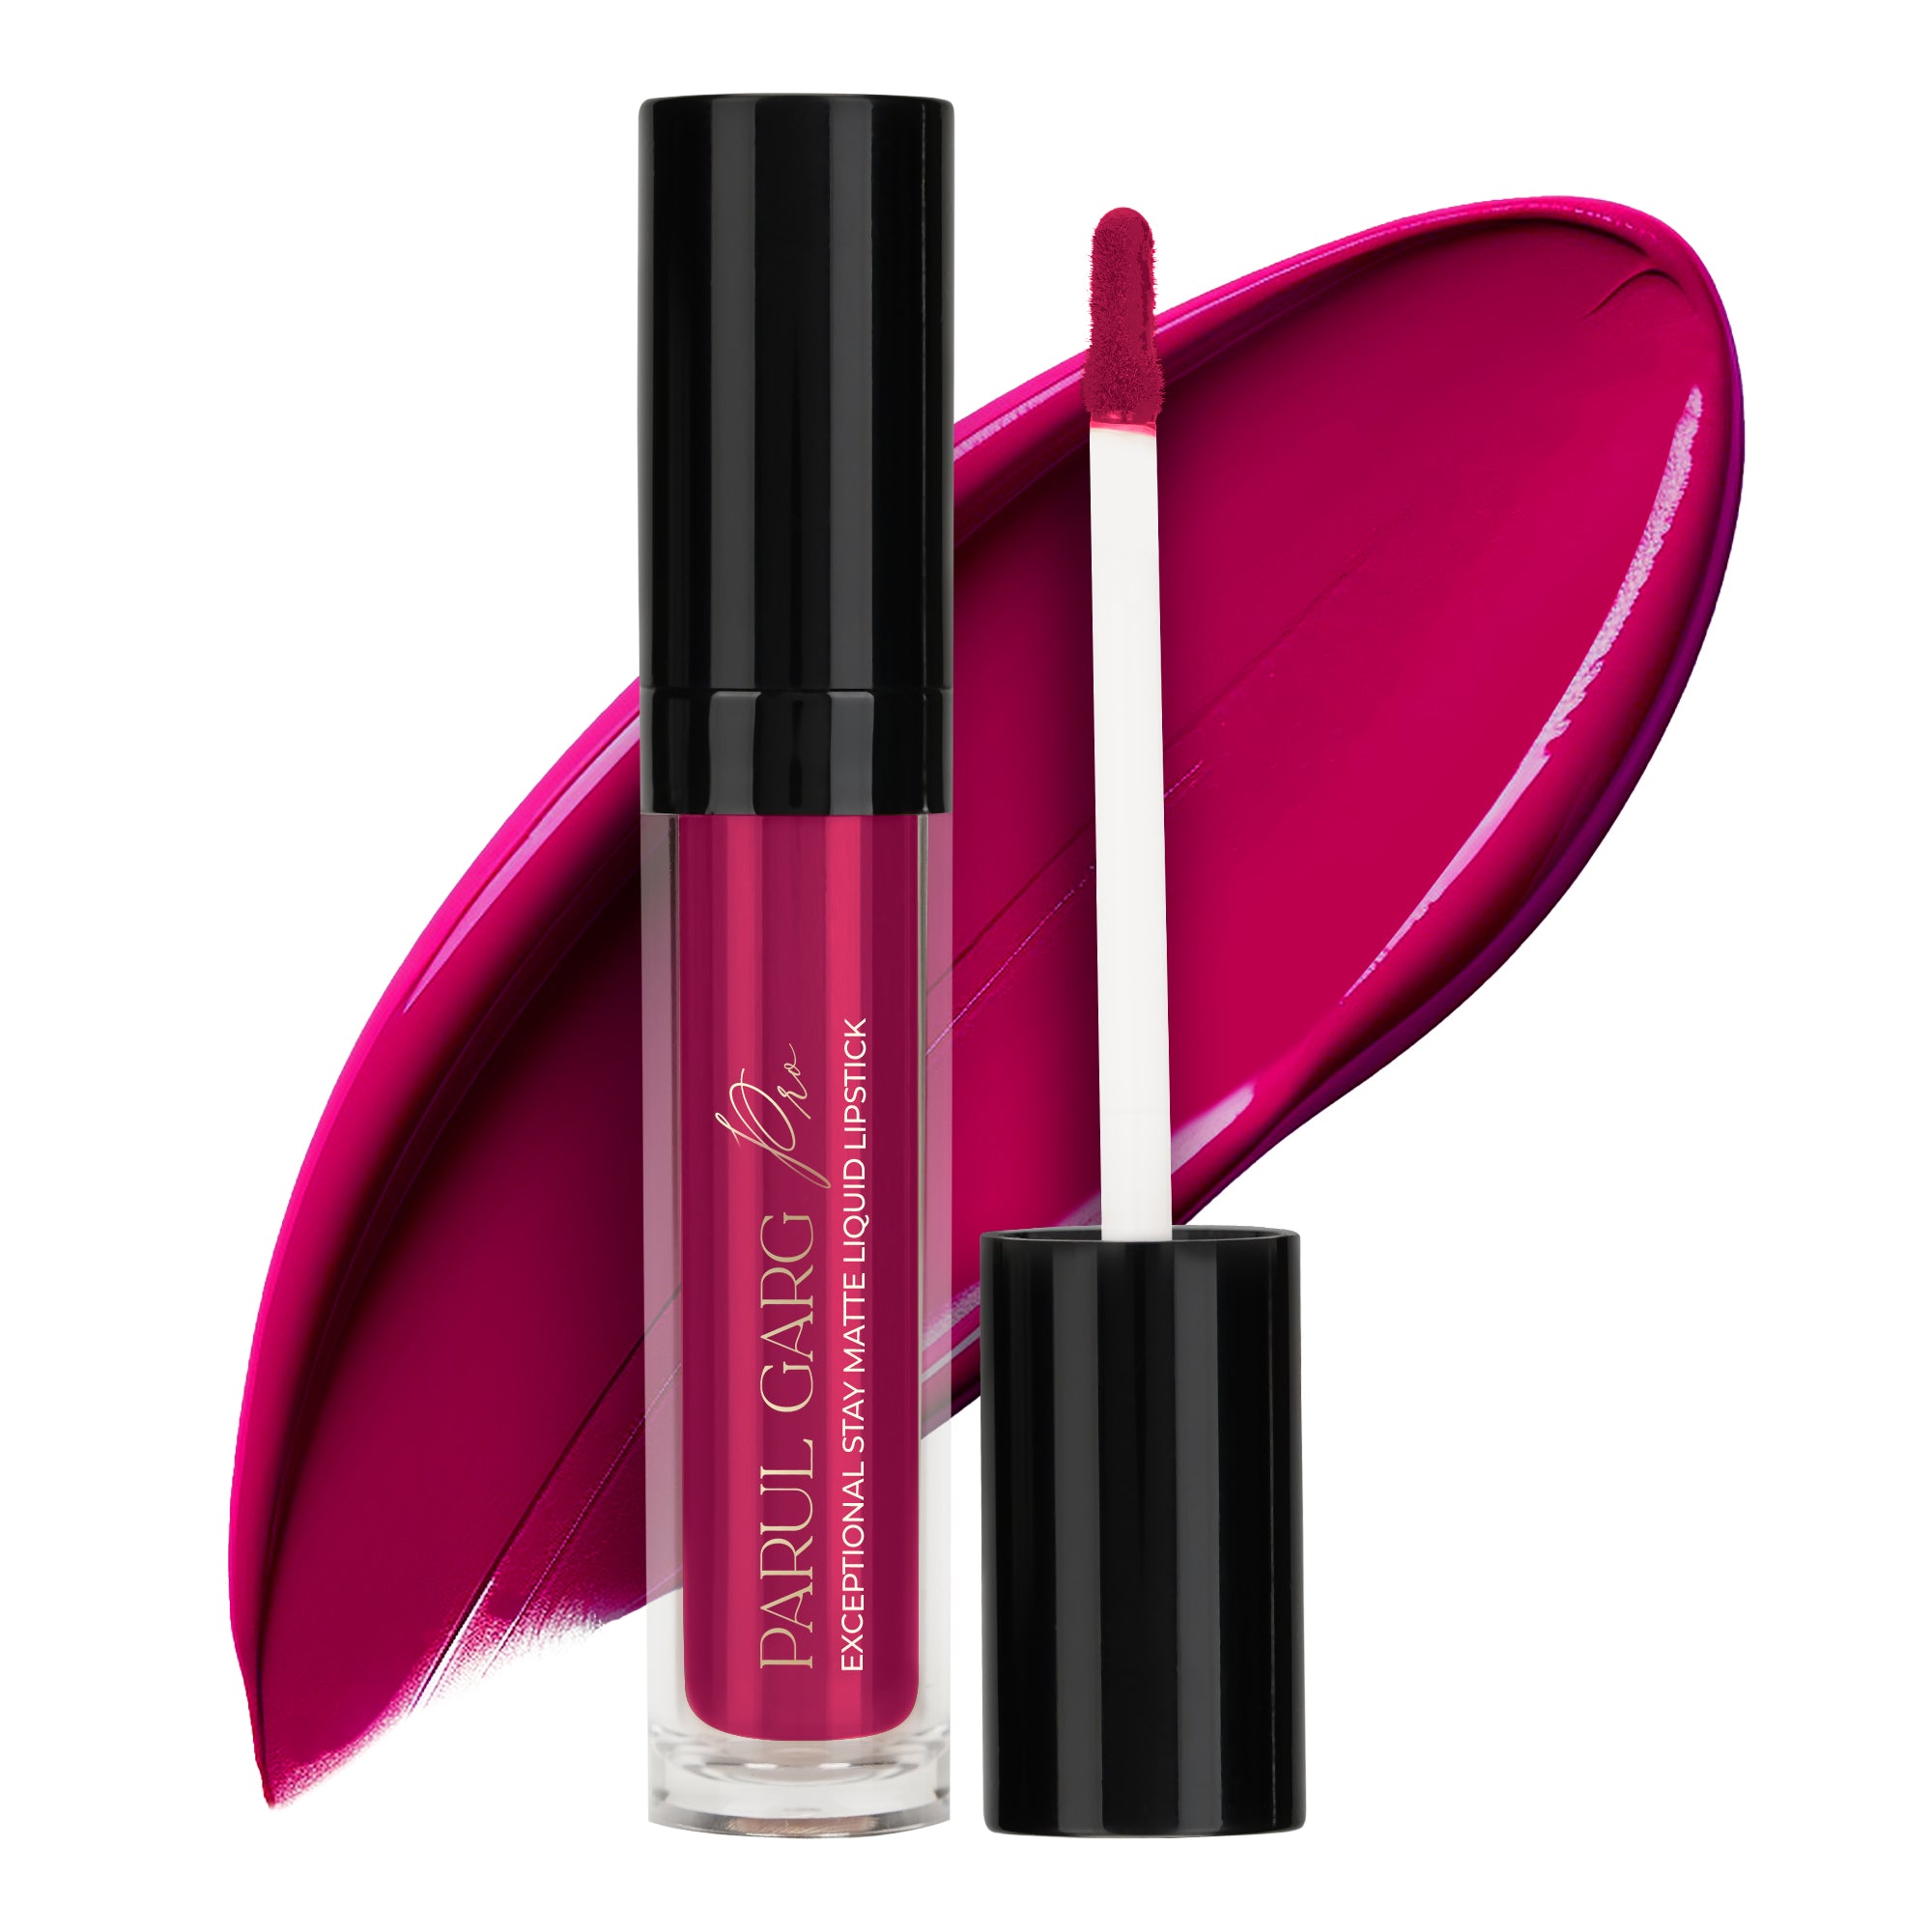 Exceptional Stay Matte Liquid Lipstick Shade: Juliet Rose 09